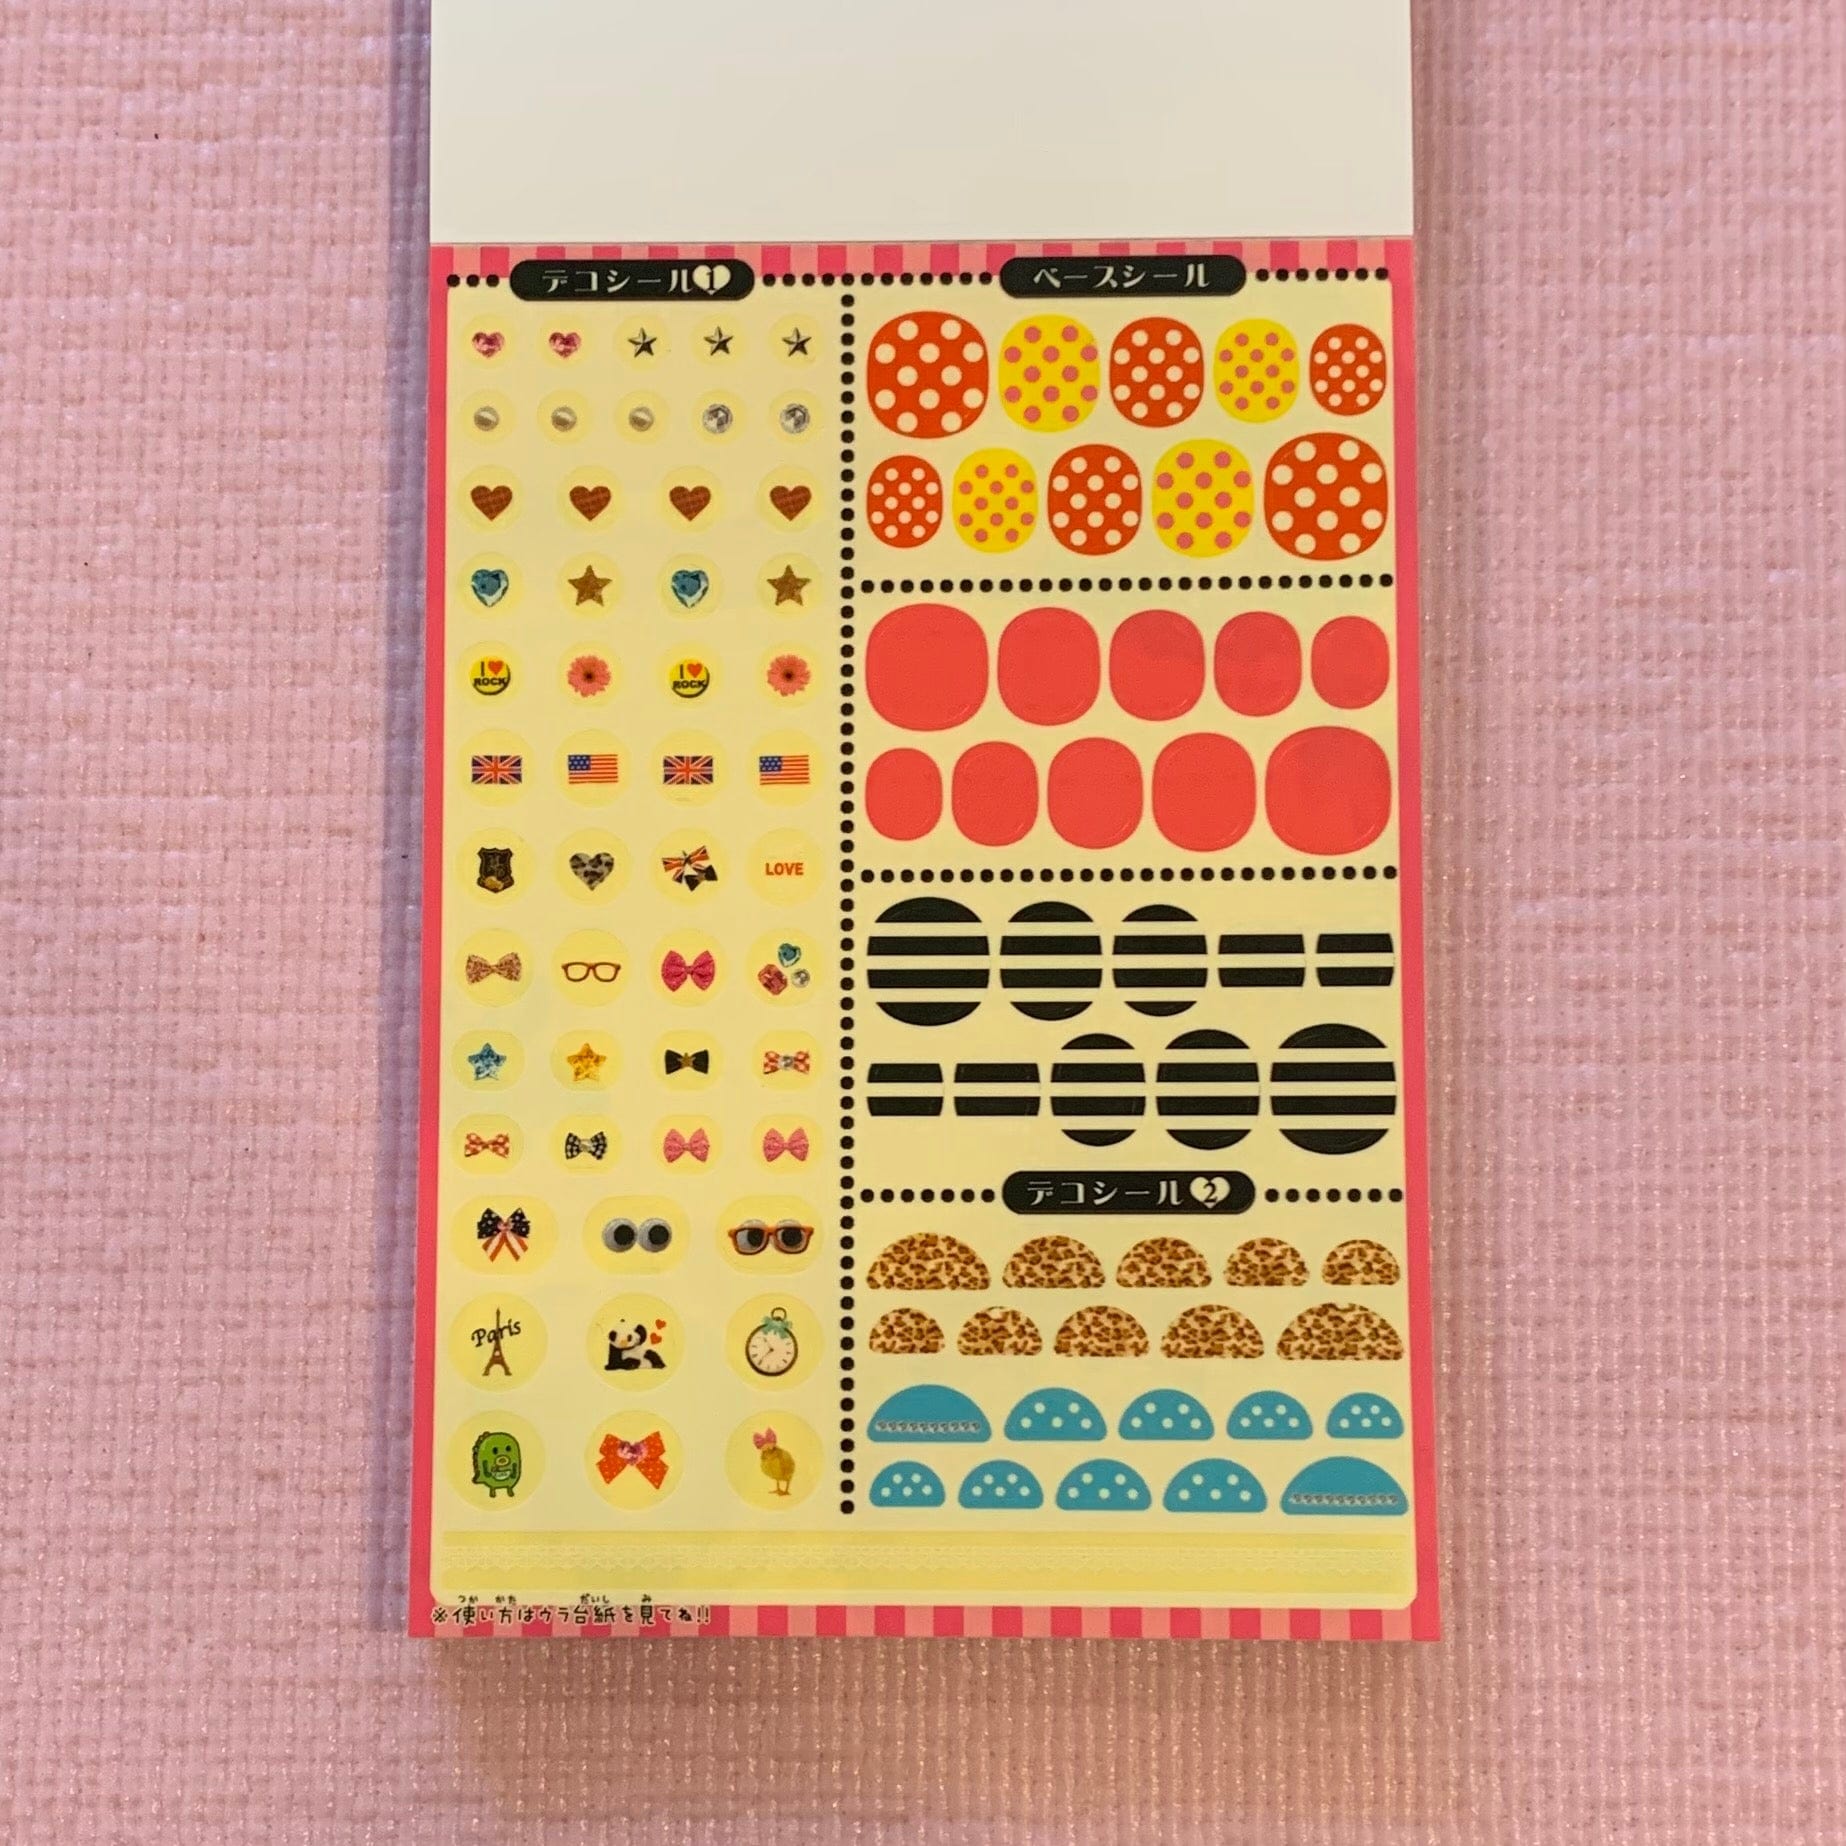 Kawaii Import Foppish Memo with Stickers: Baby Sister Toresodo Kawaii Gifts 4530344605327